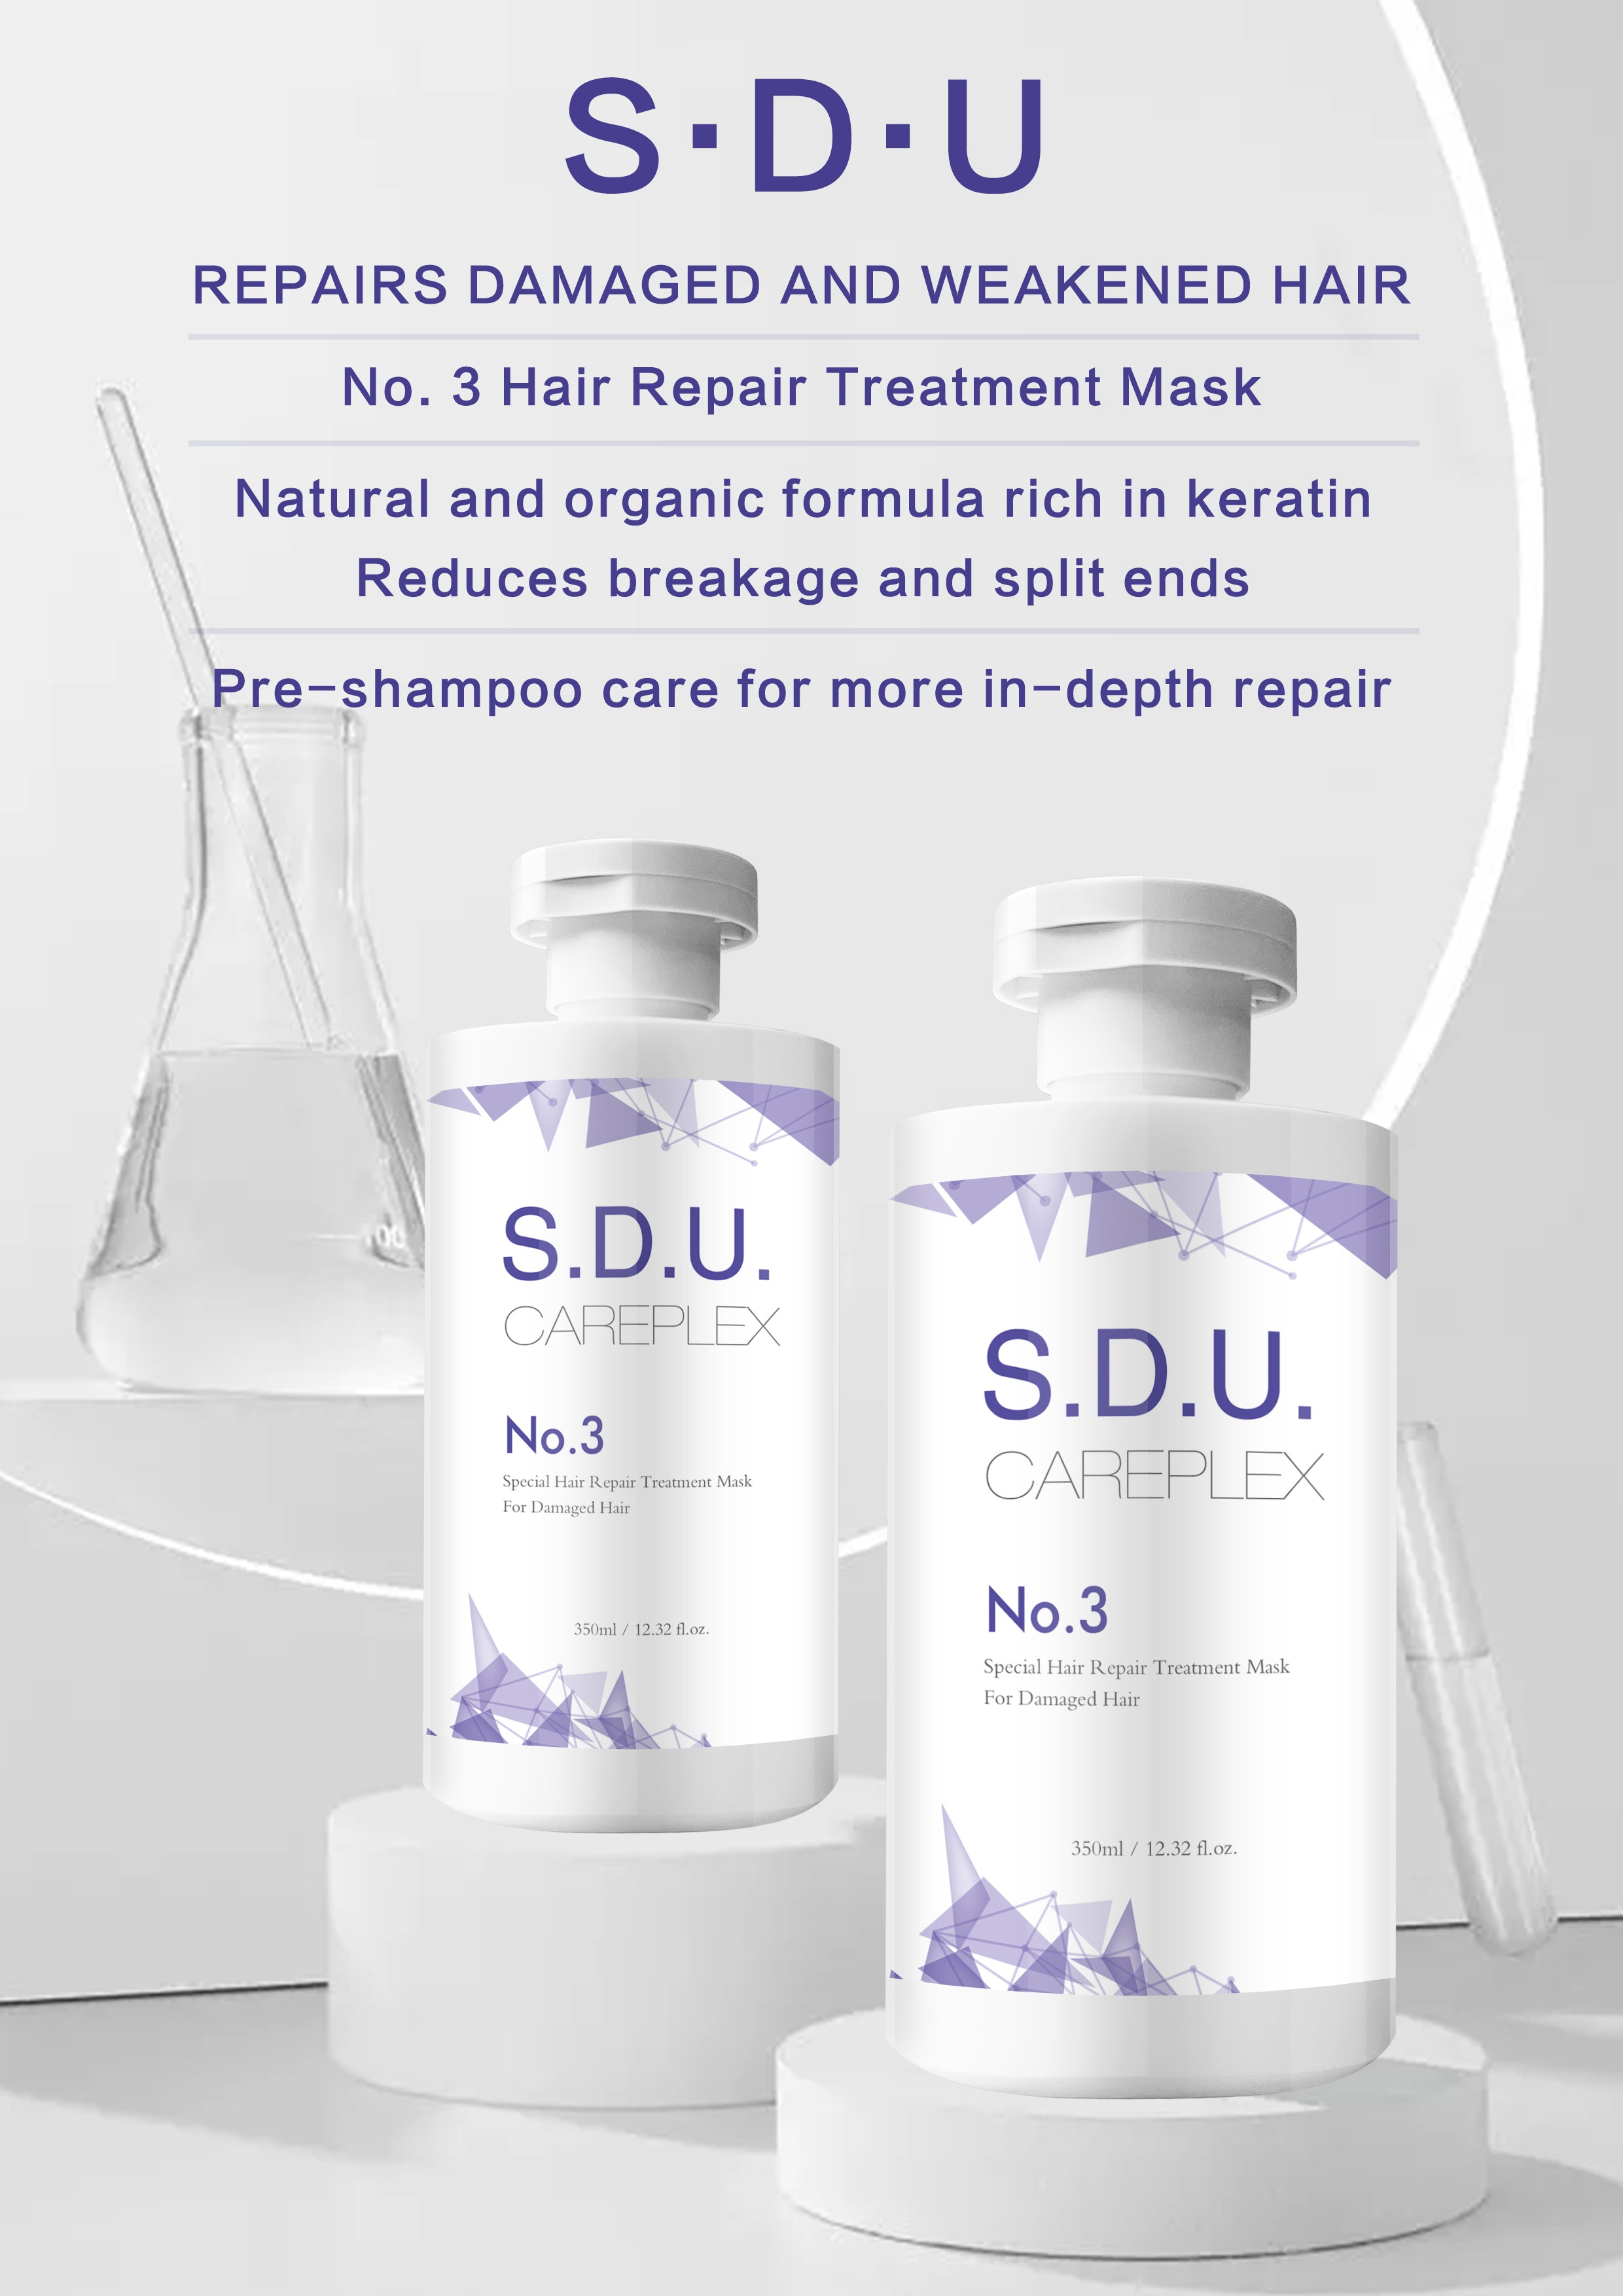 Pre- shampoo care for more in - depth repair